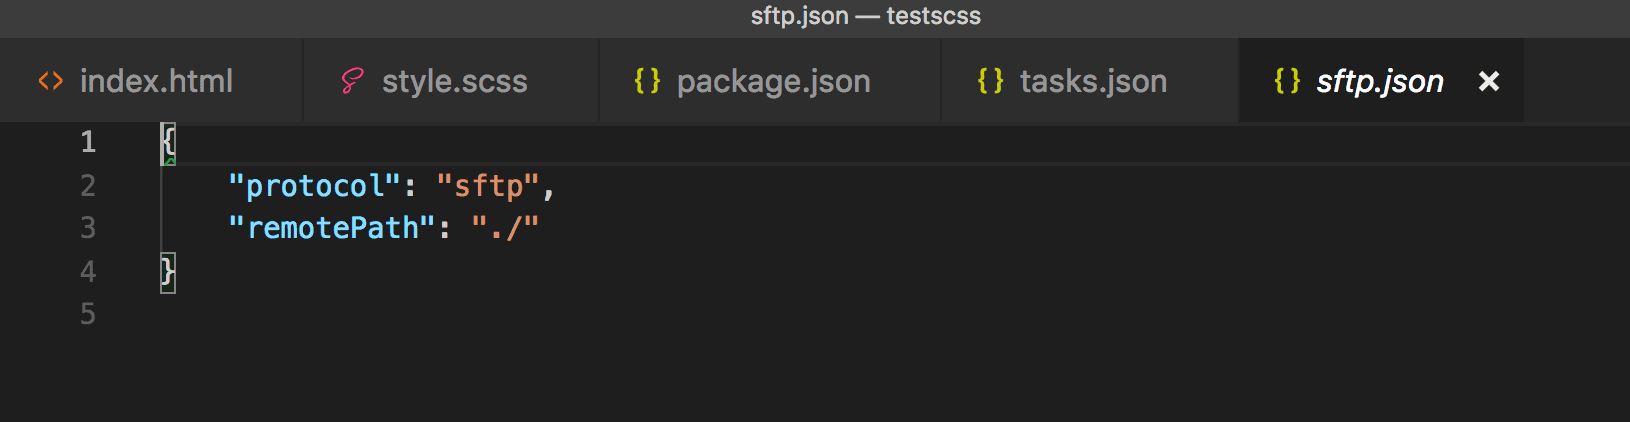 sftp.jsonファイルが生成される